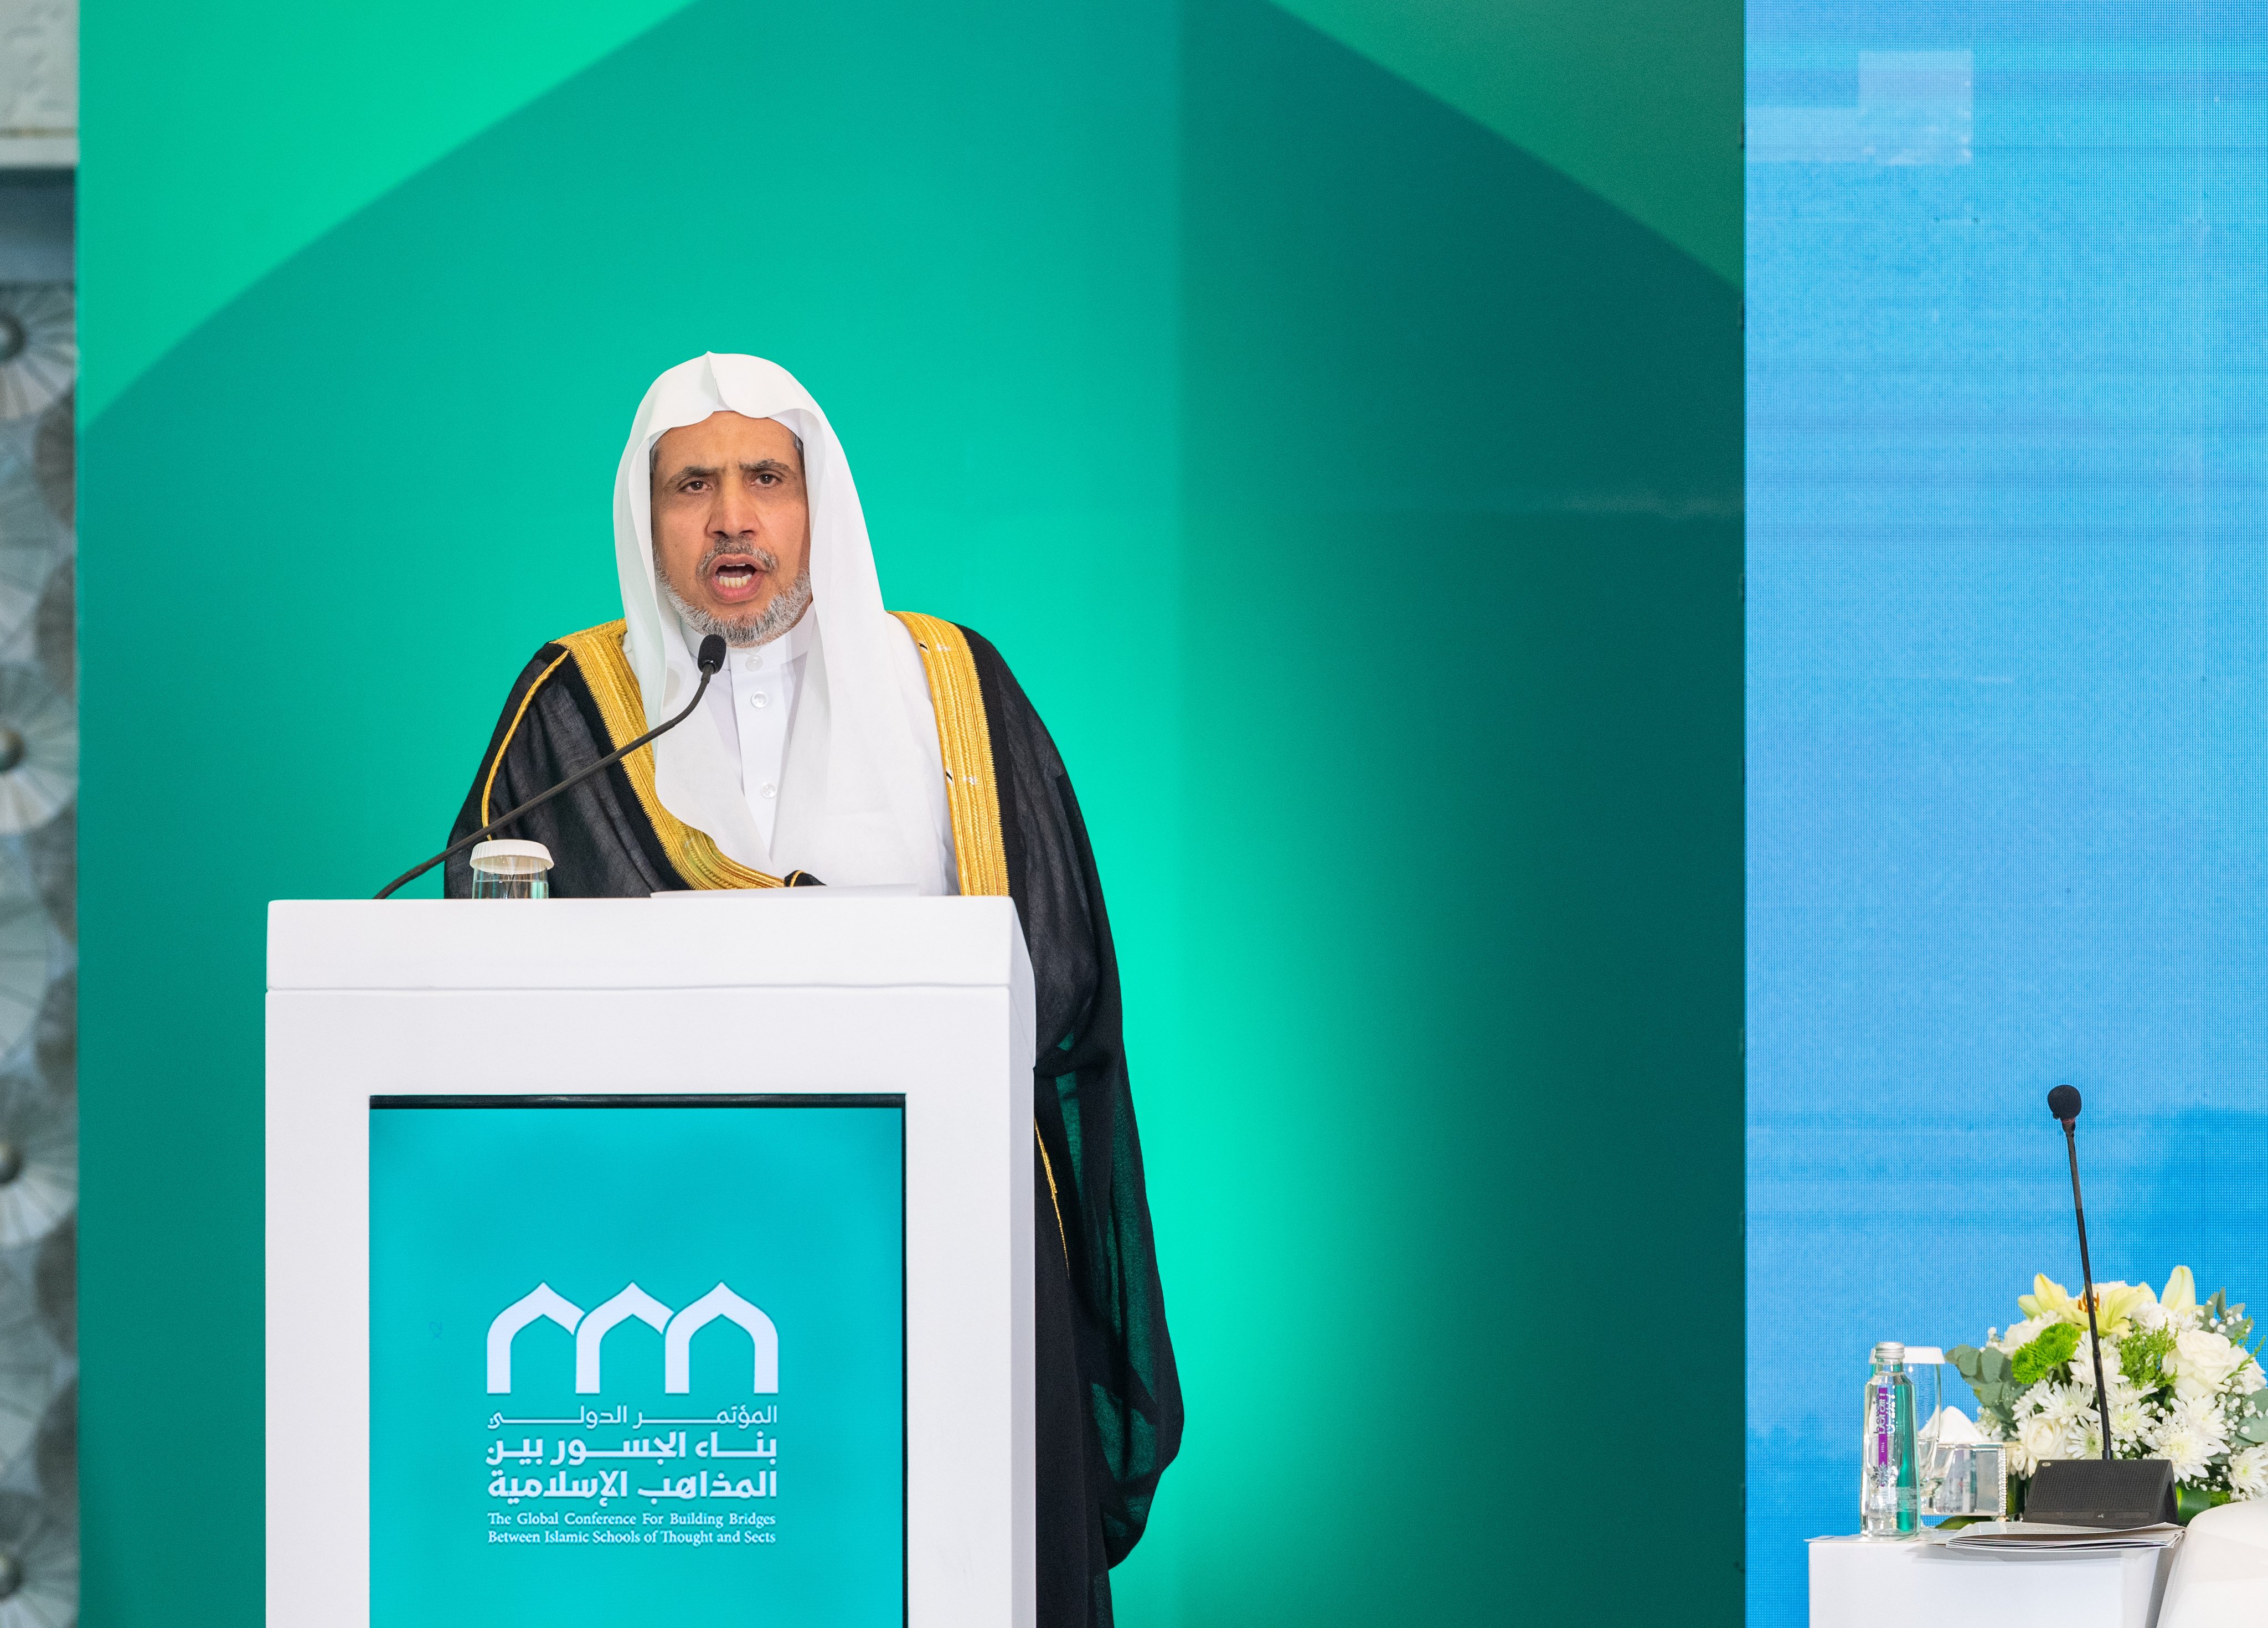 Yang Mulia Sekretaris Jenderal LMD, Ketua Asosiasi Ulama Muslim, Syekh Dr. Mohammed bin Abdulkarim Al-Issa, dalam pidatonya pada sesi pembukaan konferensi: “Membangun Jembatan Antar Mazhab Islam”: